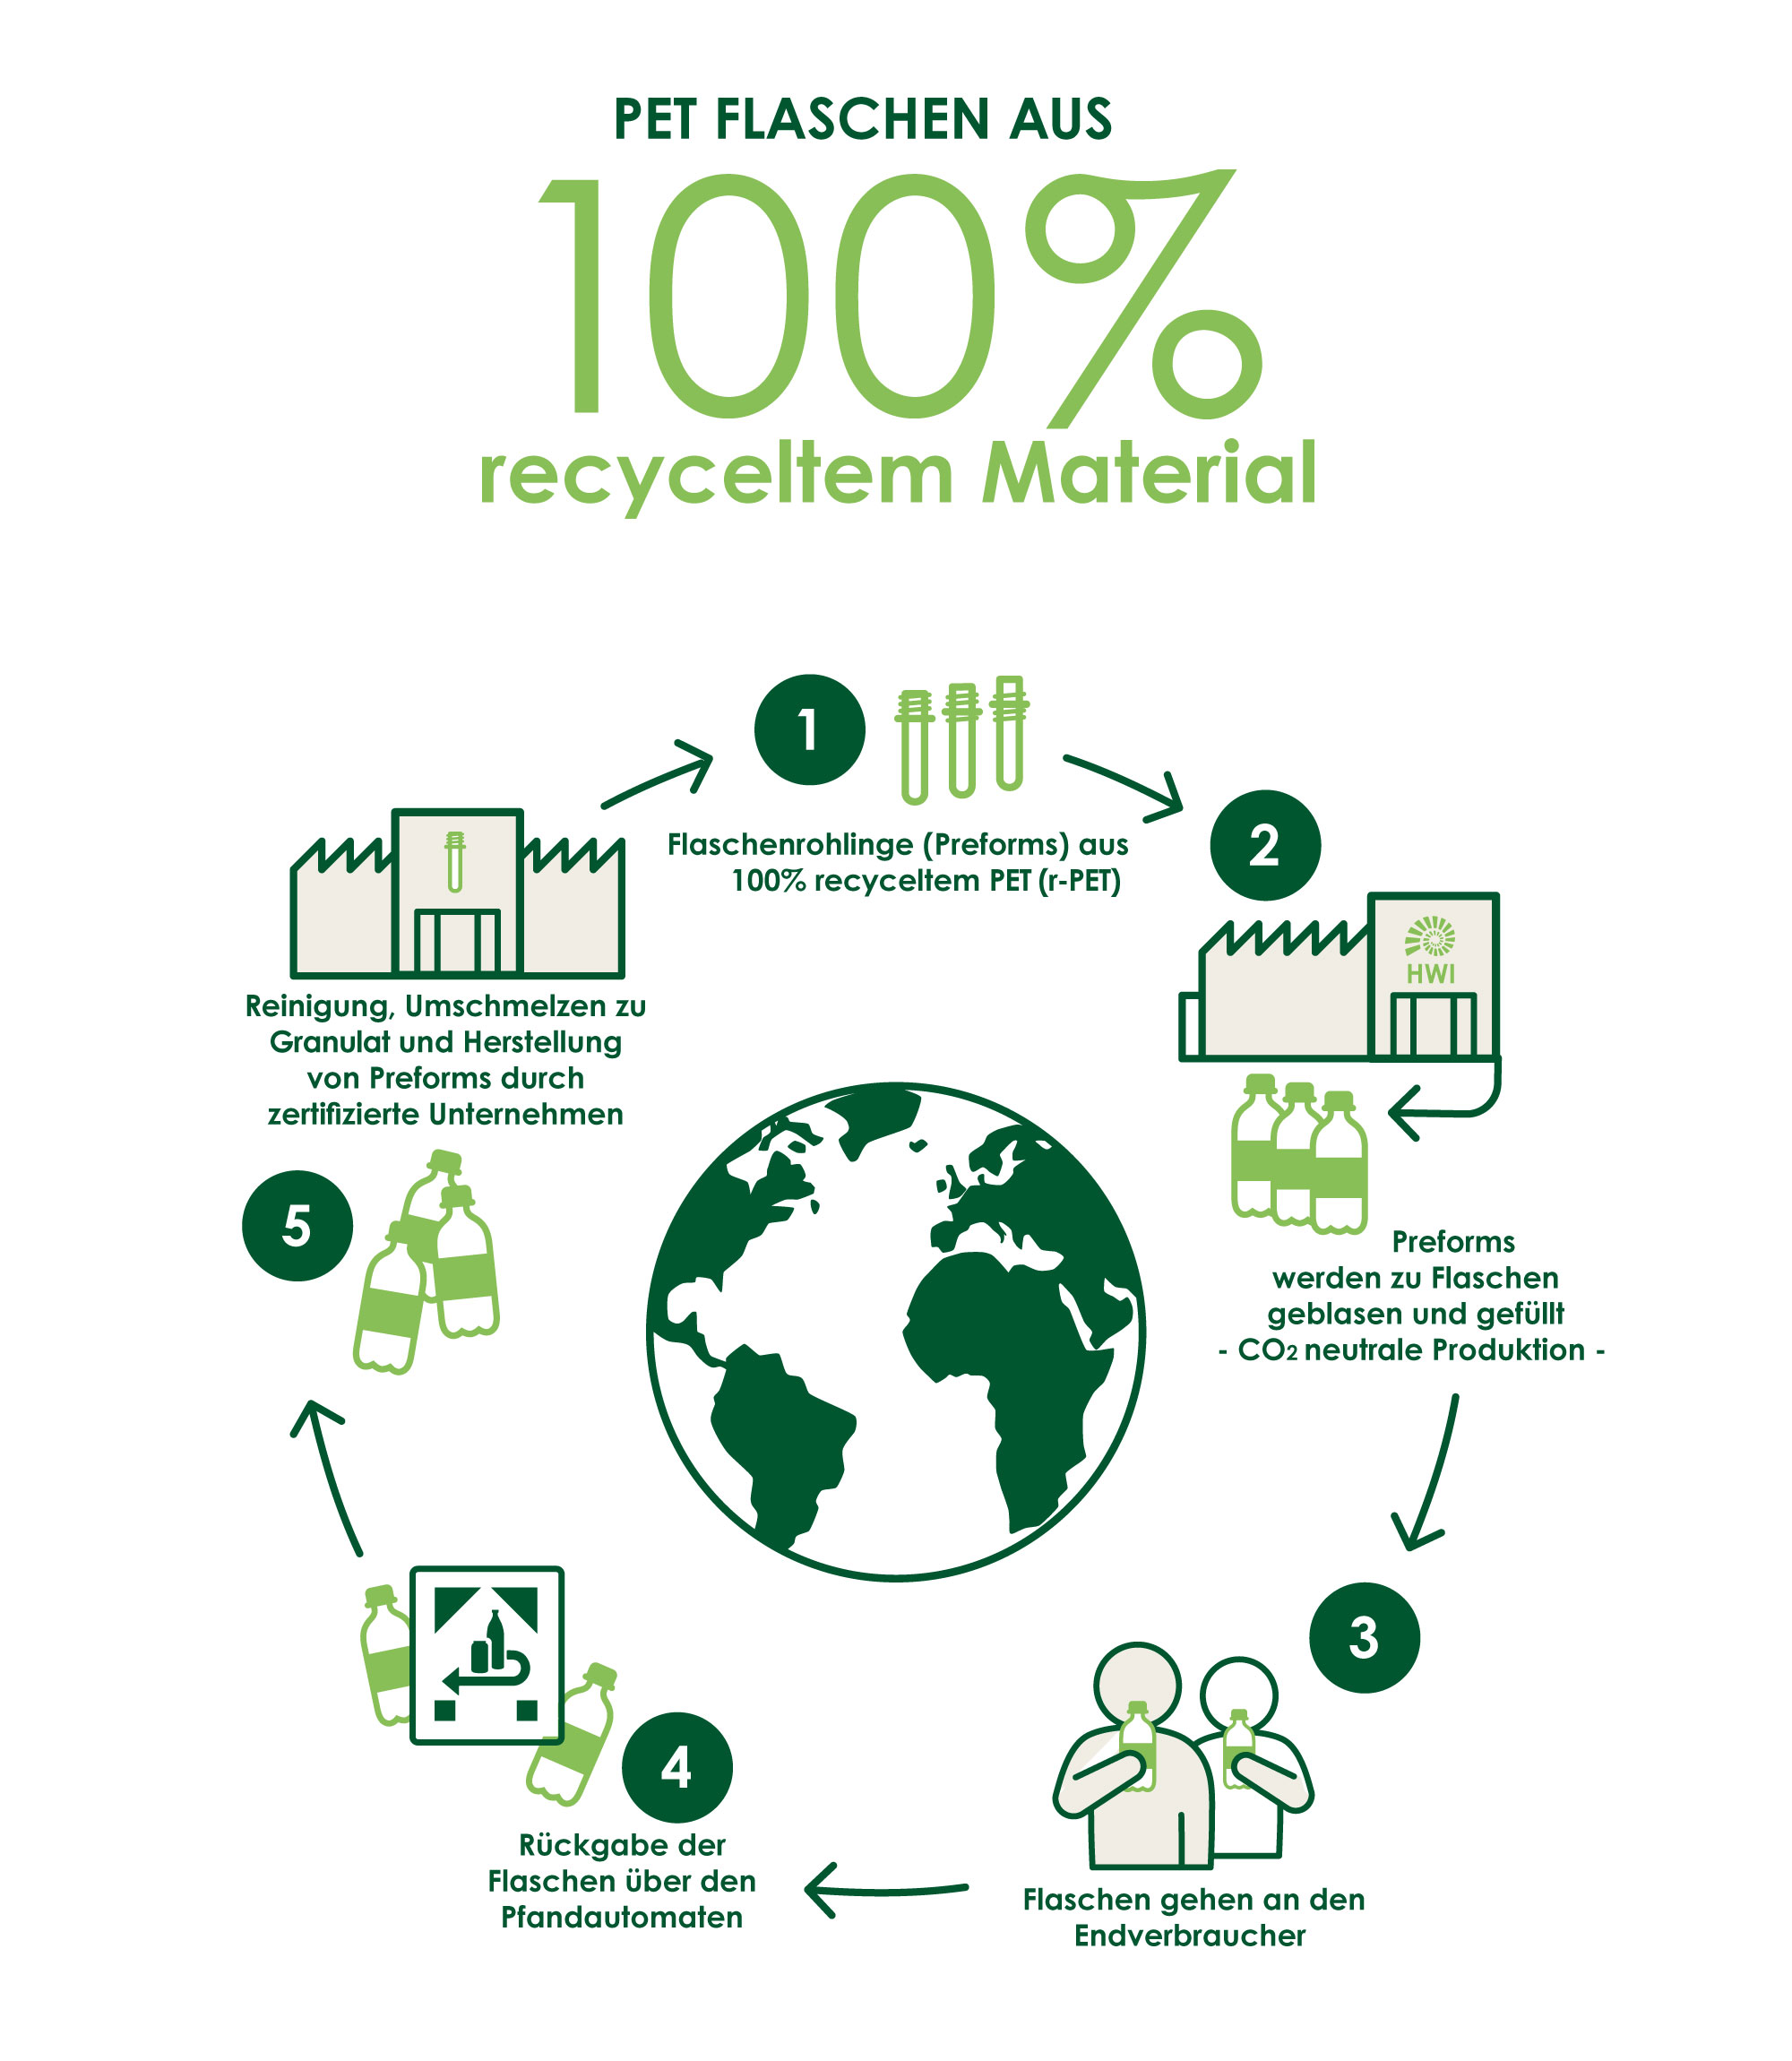 YOUR-WATER Kreislauf: PET-Flaschen aus 100% recyceltem Material